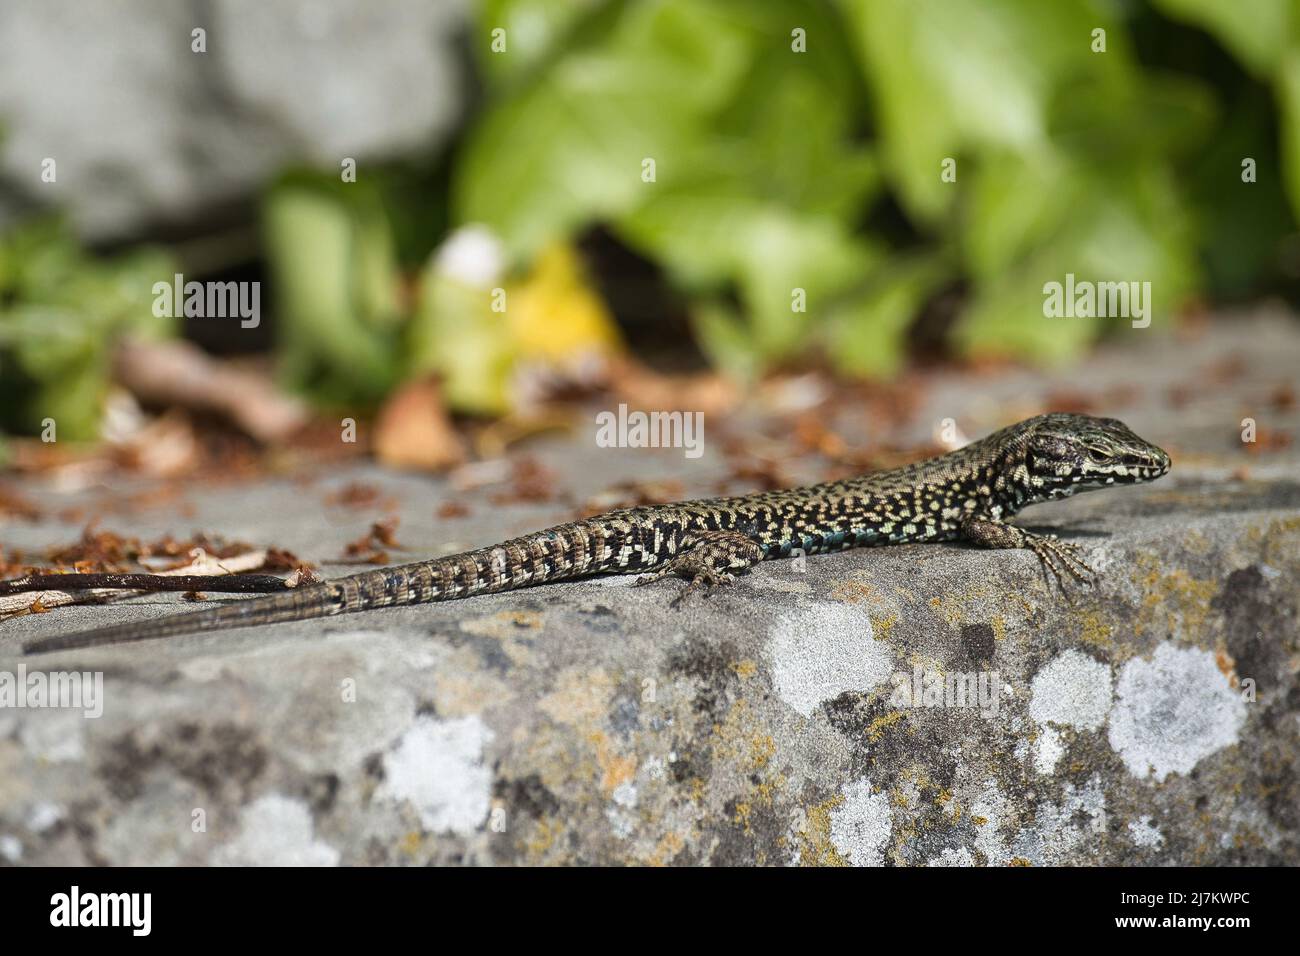 Anatololacerta anatolica, the common rock lizard basking in the sunshine on a rock surface. Stock Photo